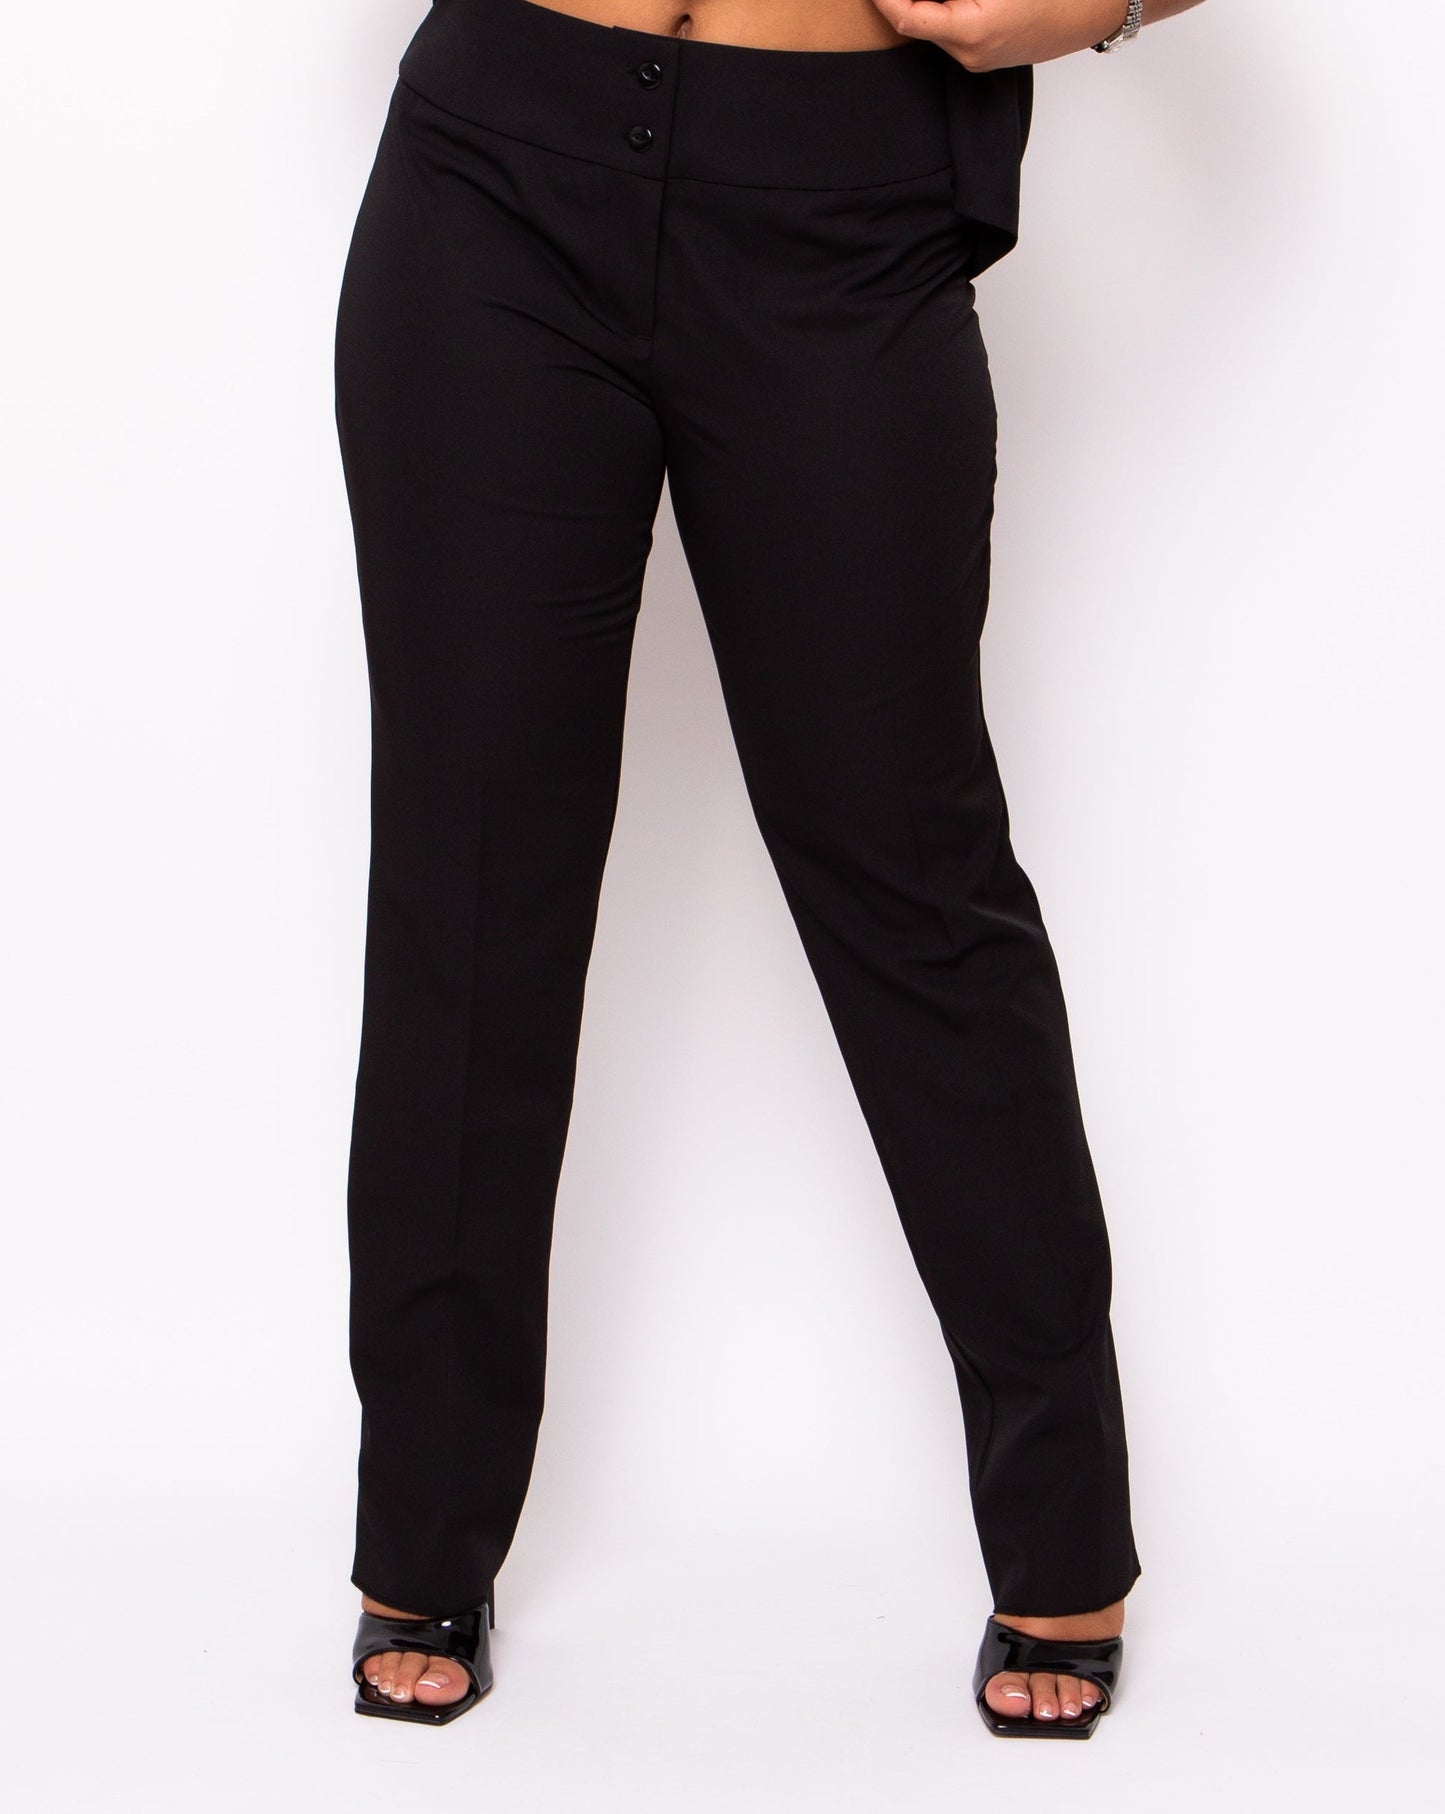 Black Trousers for Women  Female Black Beauty Work Formal Pants